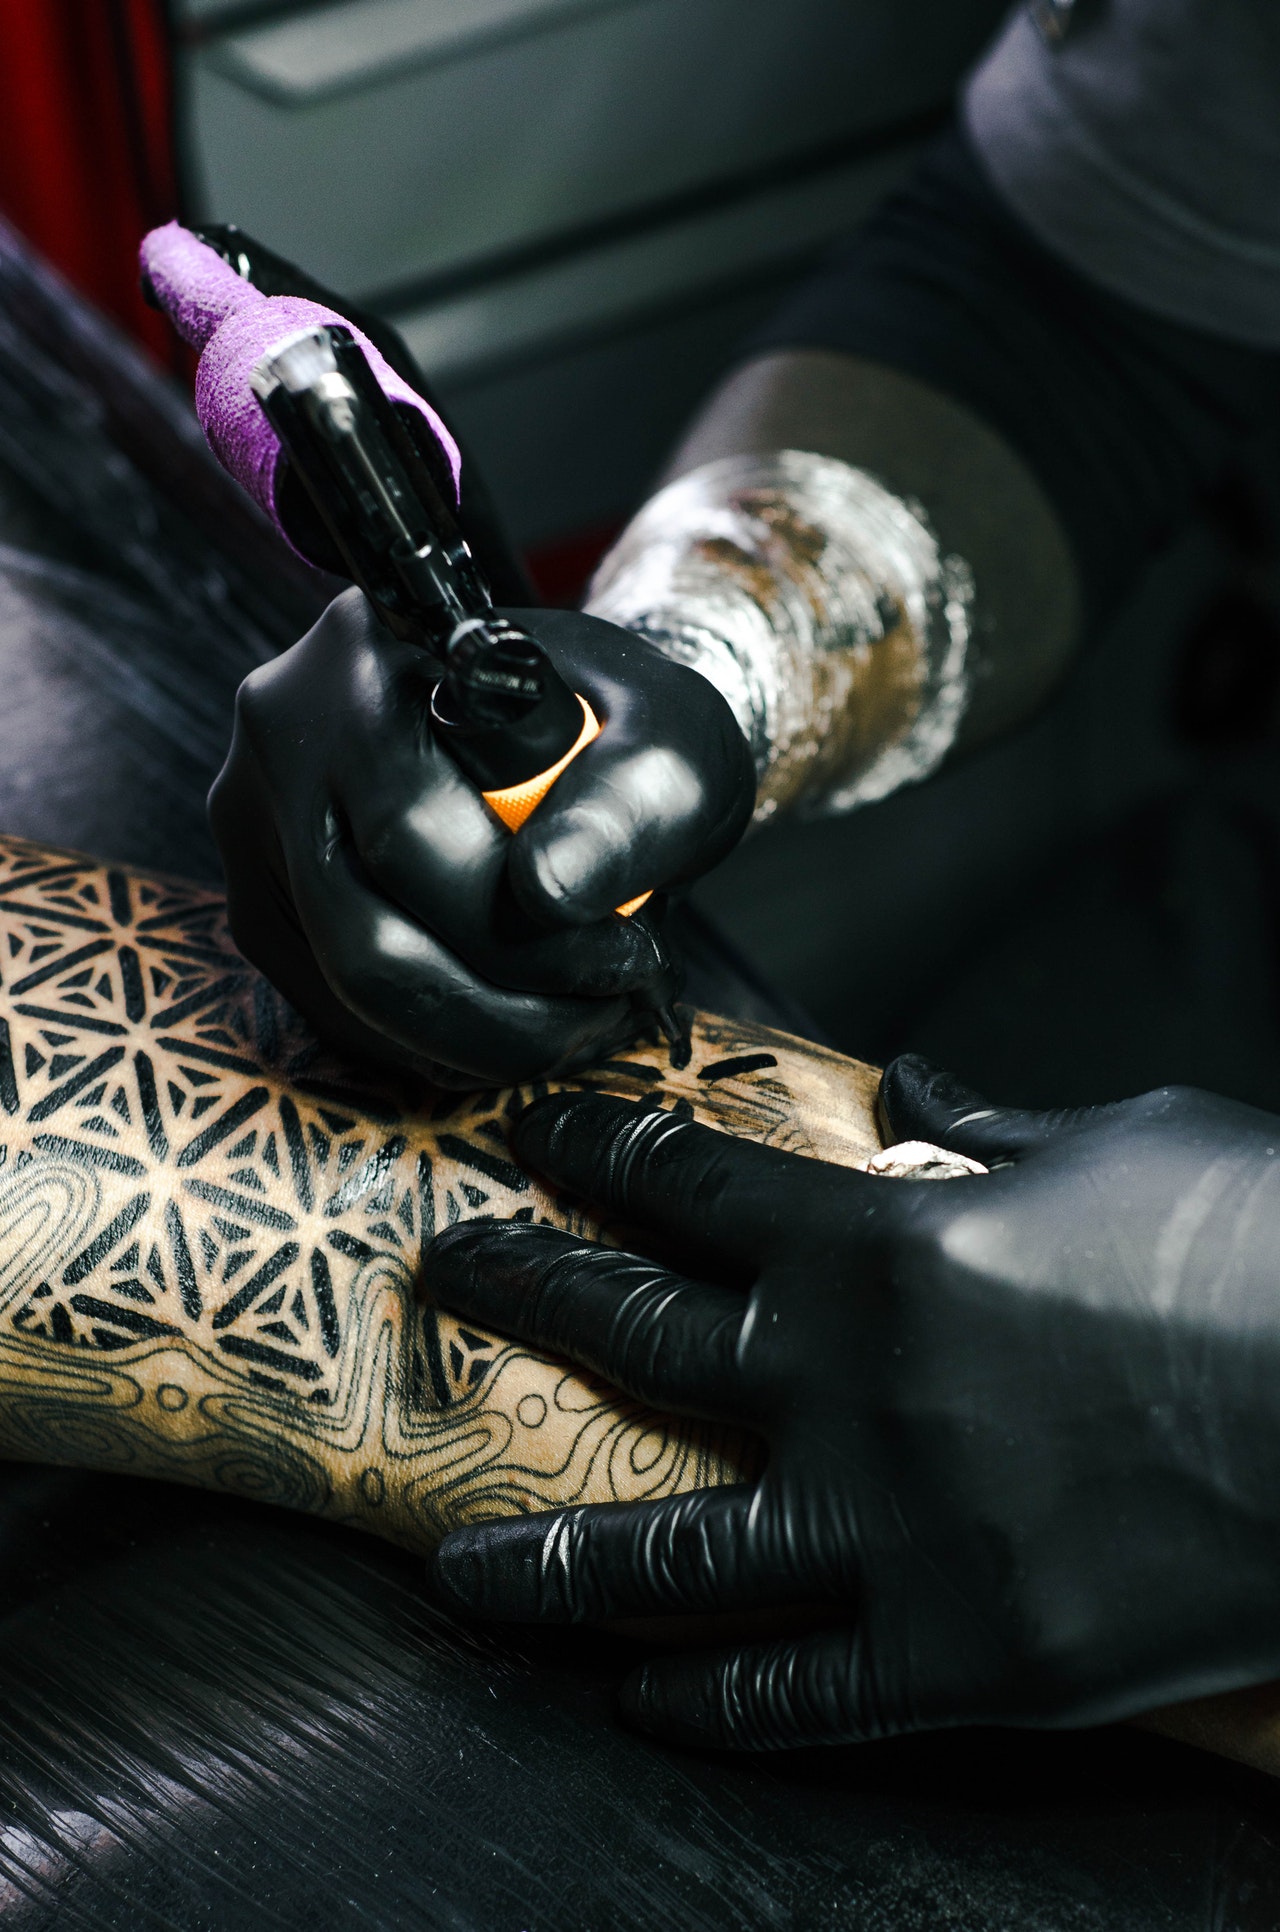 Milky Phase of A Tattoo | TikTok